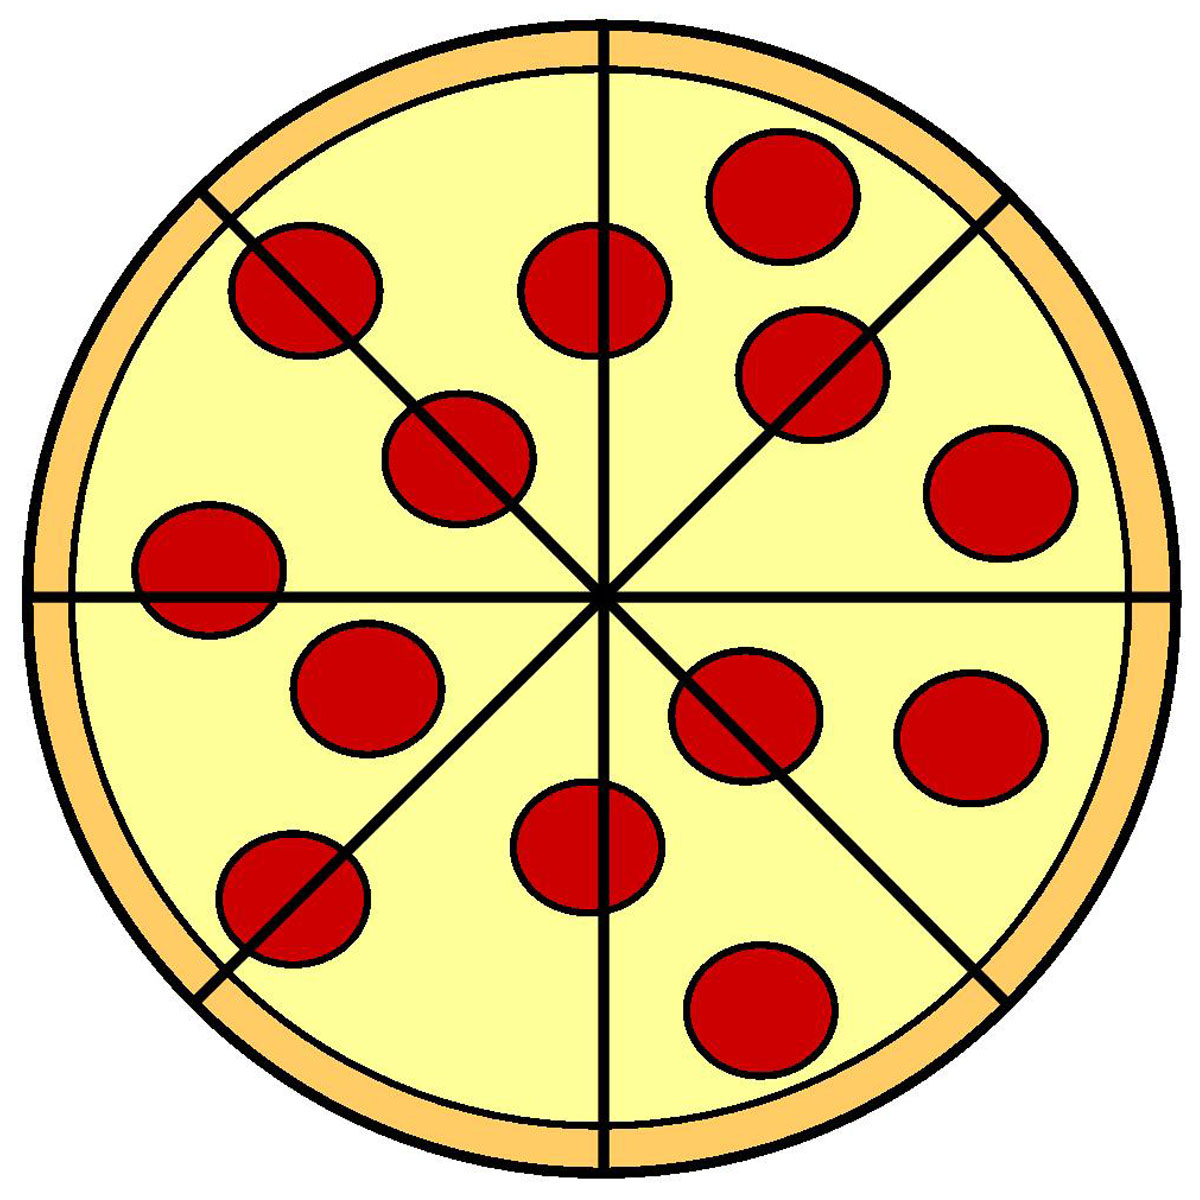 animated whole pizza